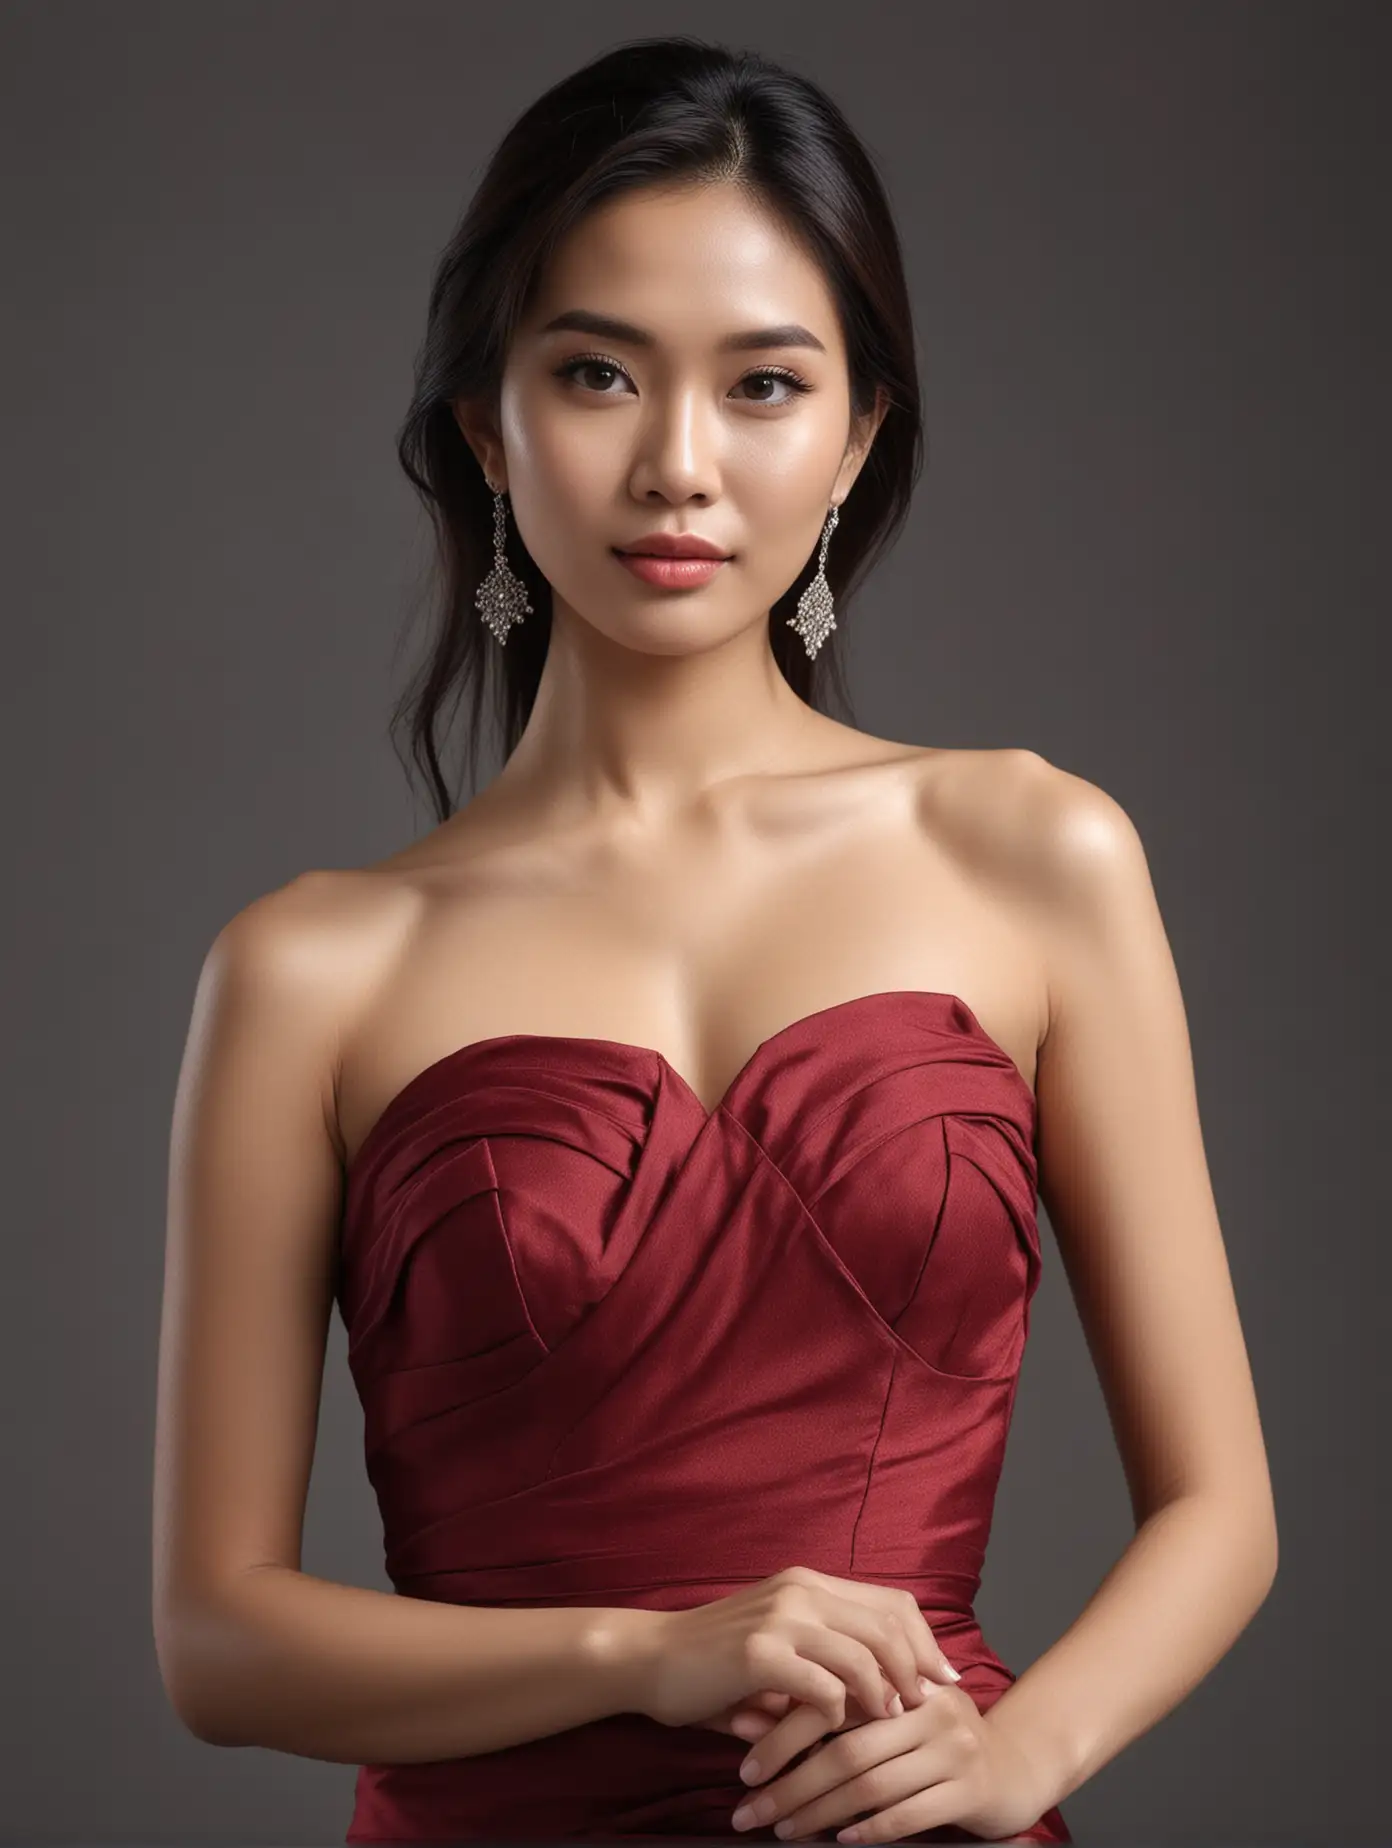 Elegant Thai Female Model in Dark Red Gown against Monochrome Background